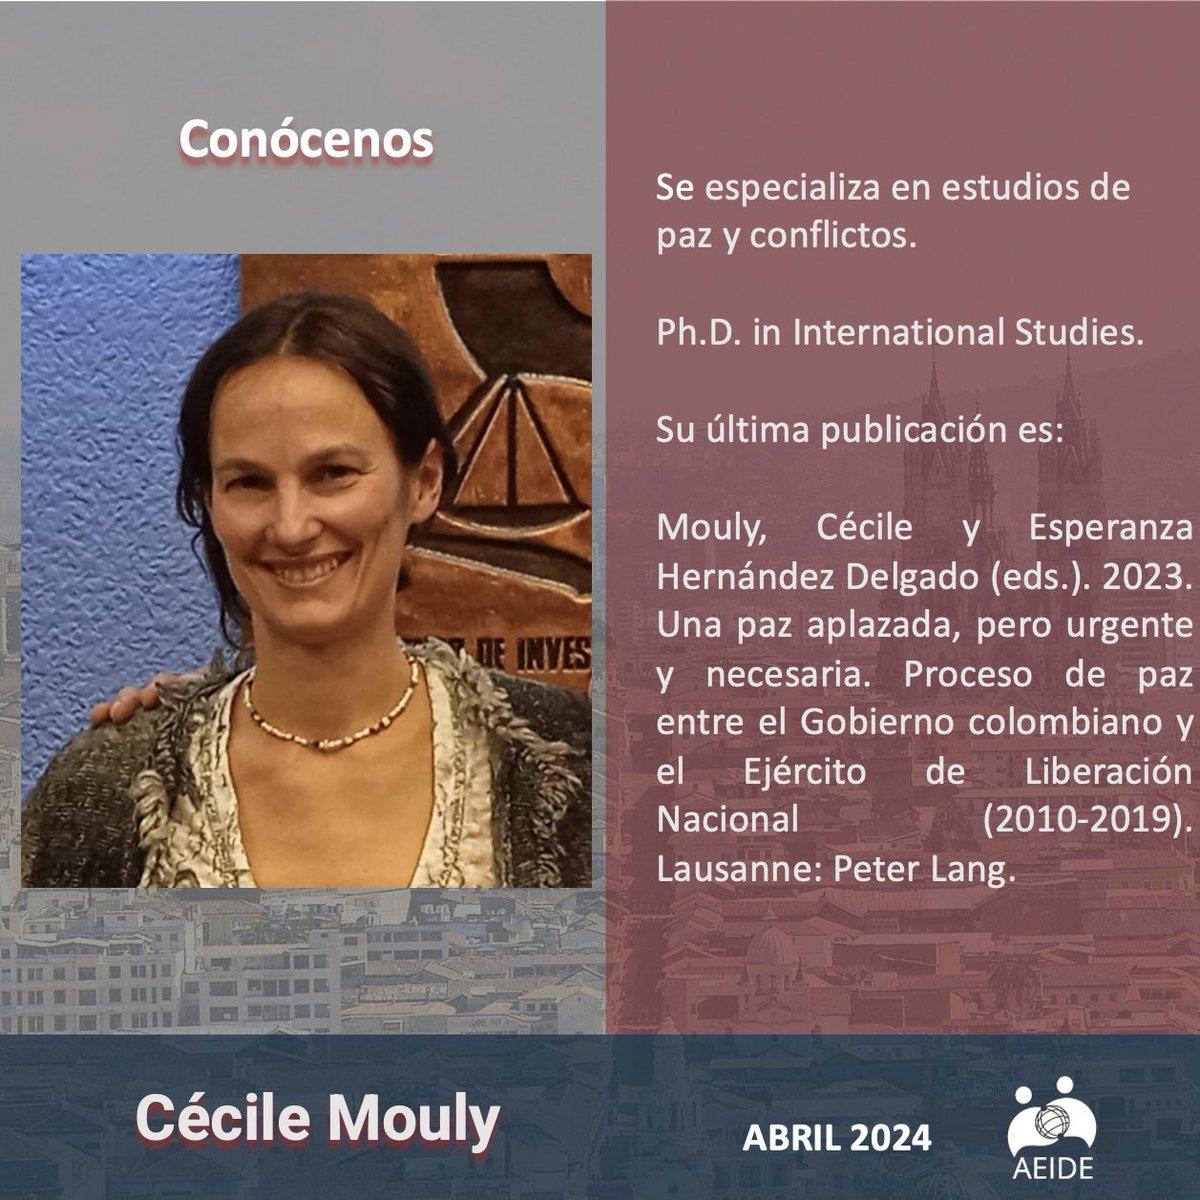 Conócenos Cécile Mouly #internationalstudies #paz #conflicto